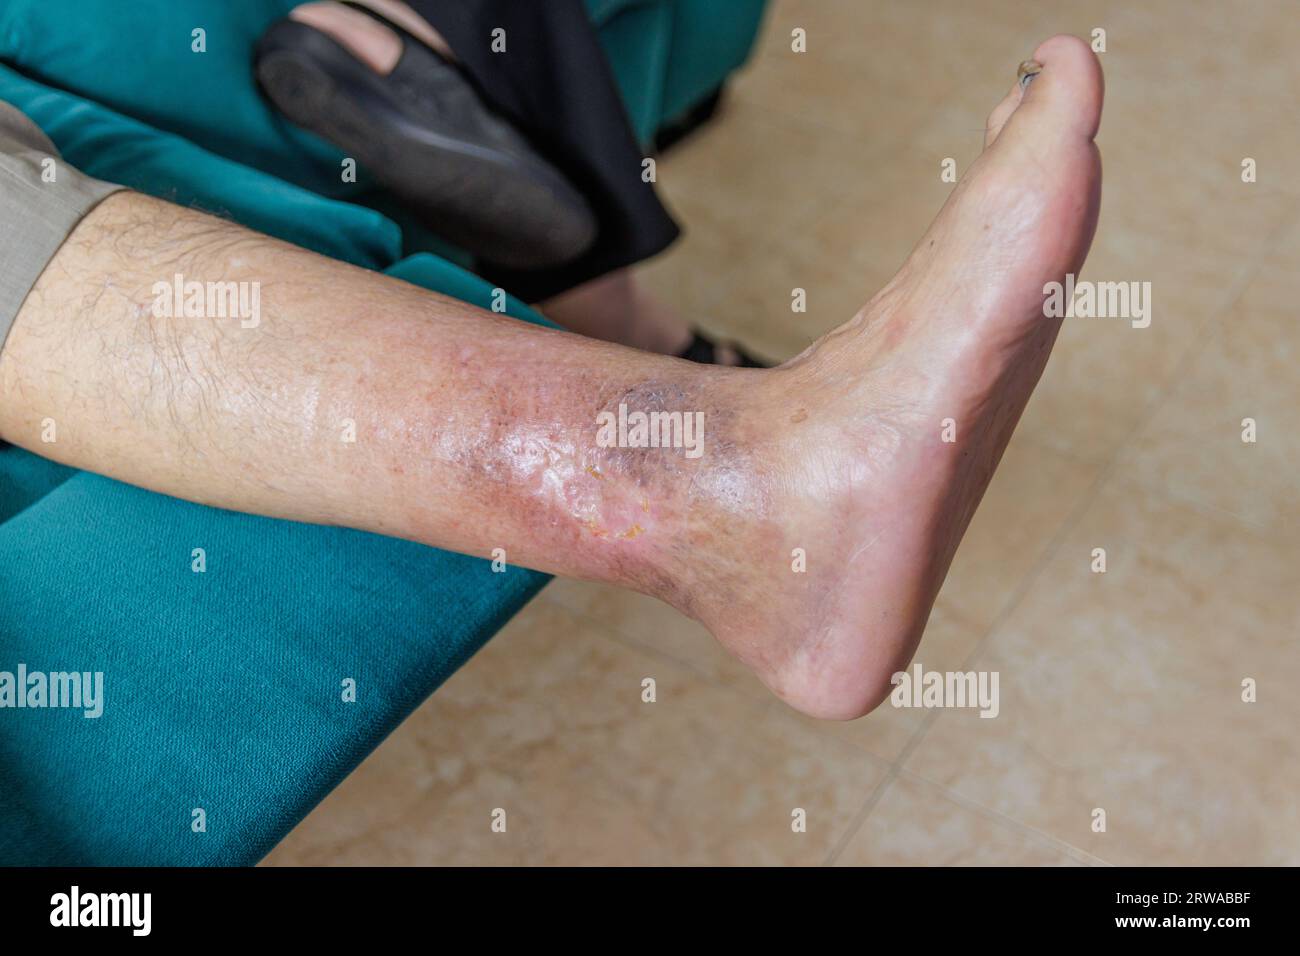 Leg senior person with ulcer due to diabetes Stock Photo